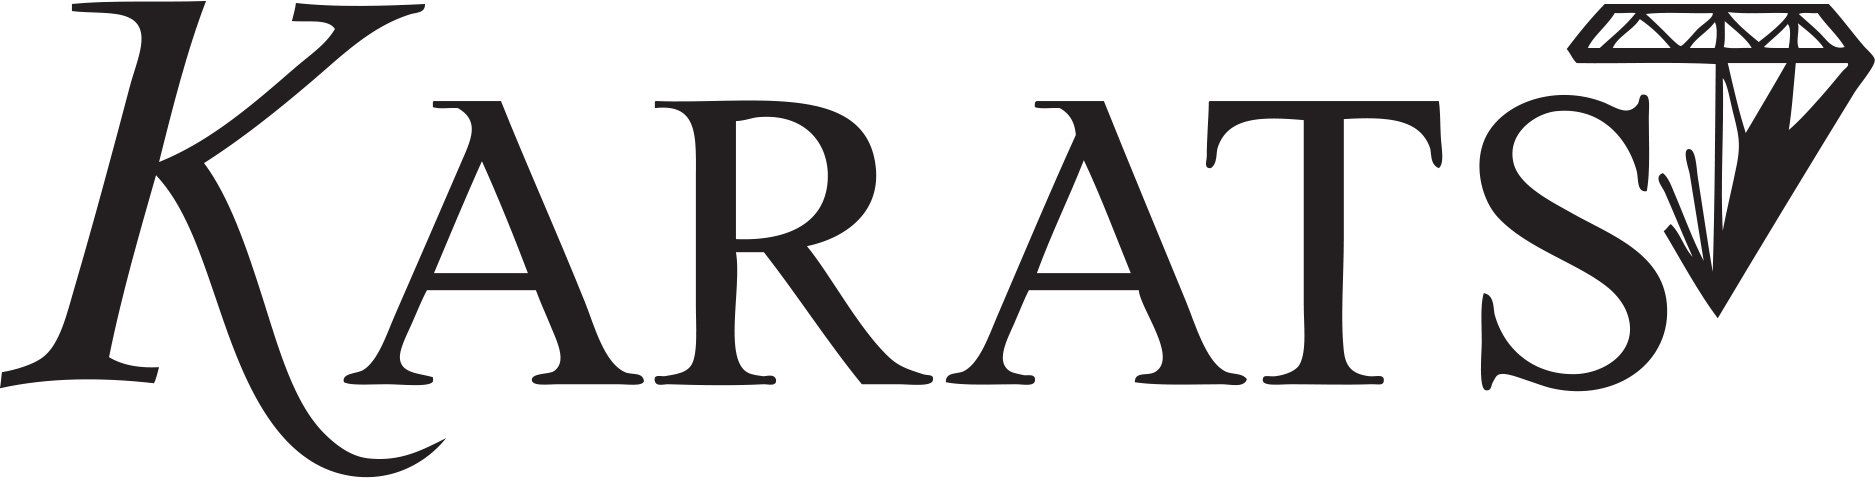 Karats Jewelers's logo